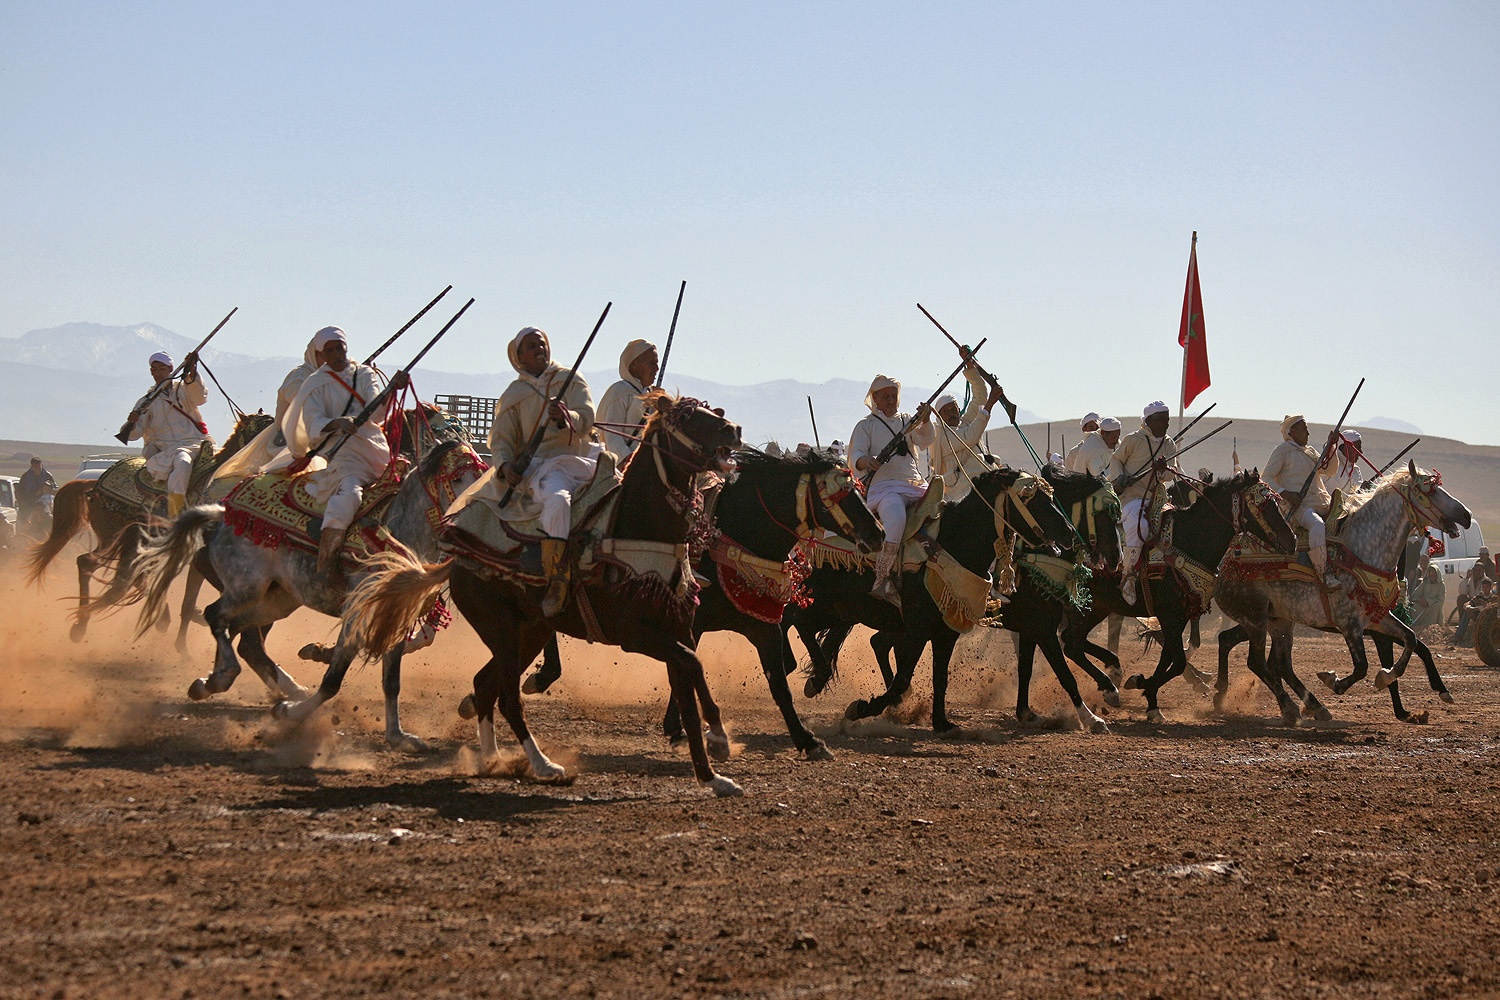 bill-hocker-local-horse-fantasia-between-marrakech-and-essaouira-morocco-2012